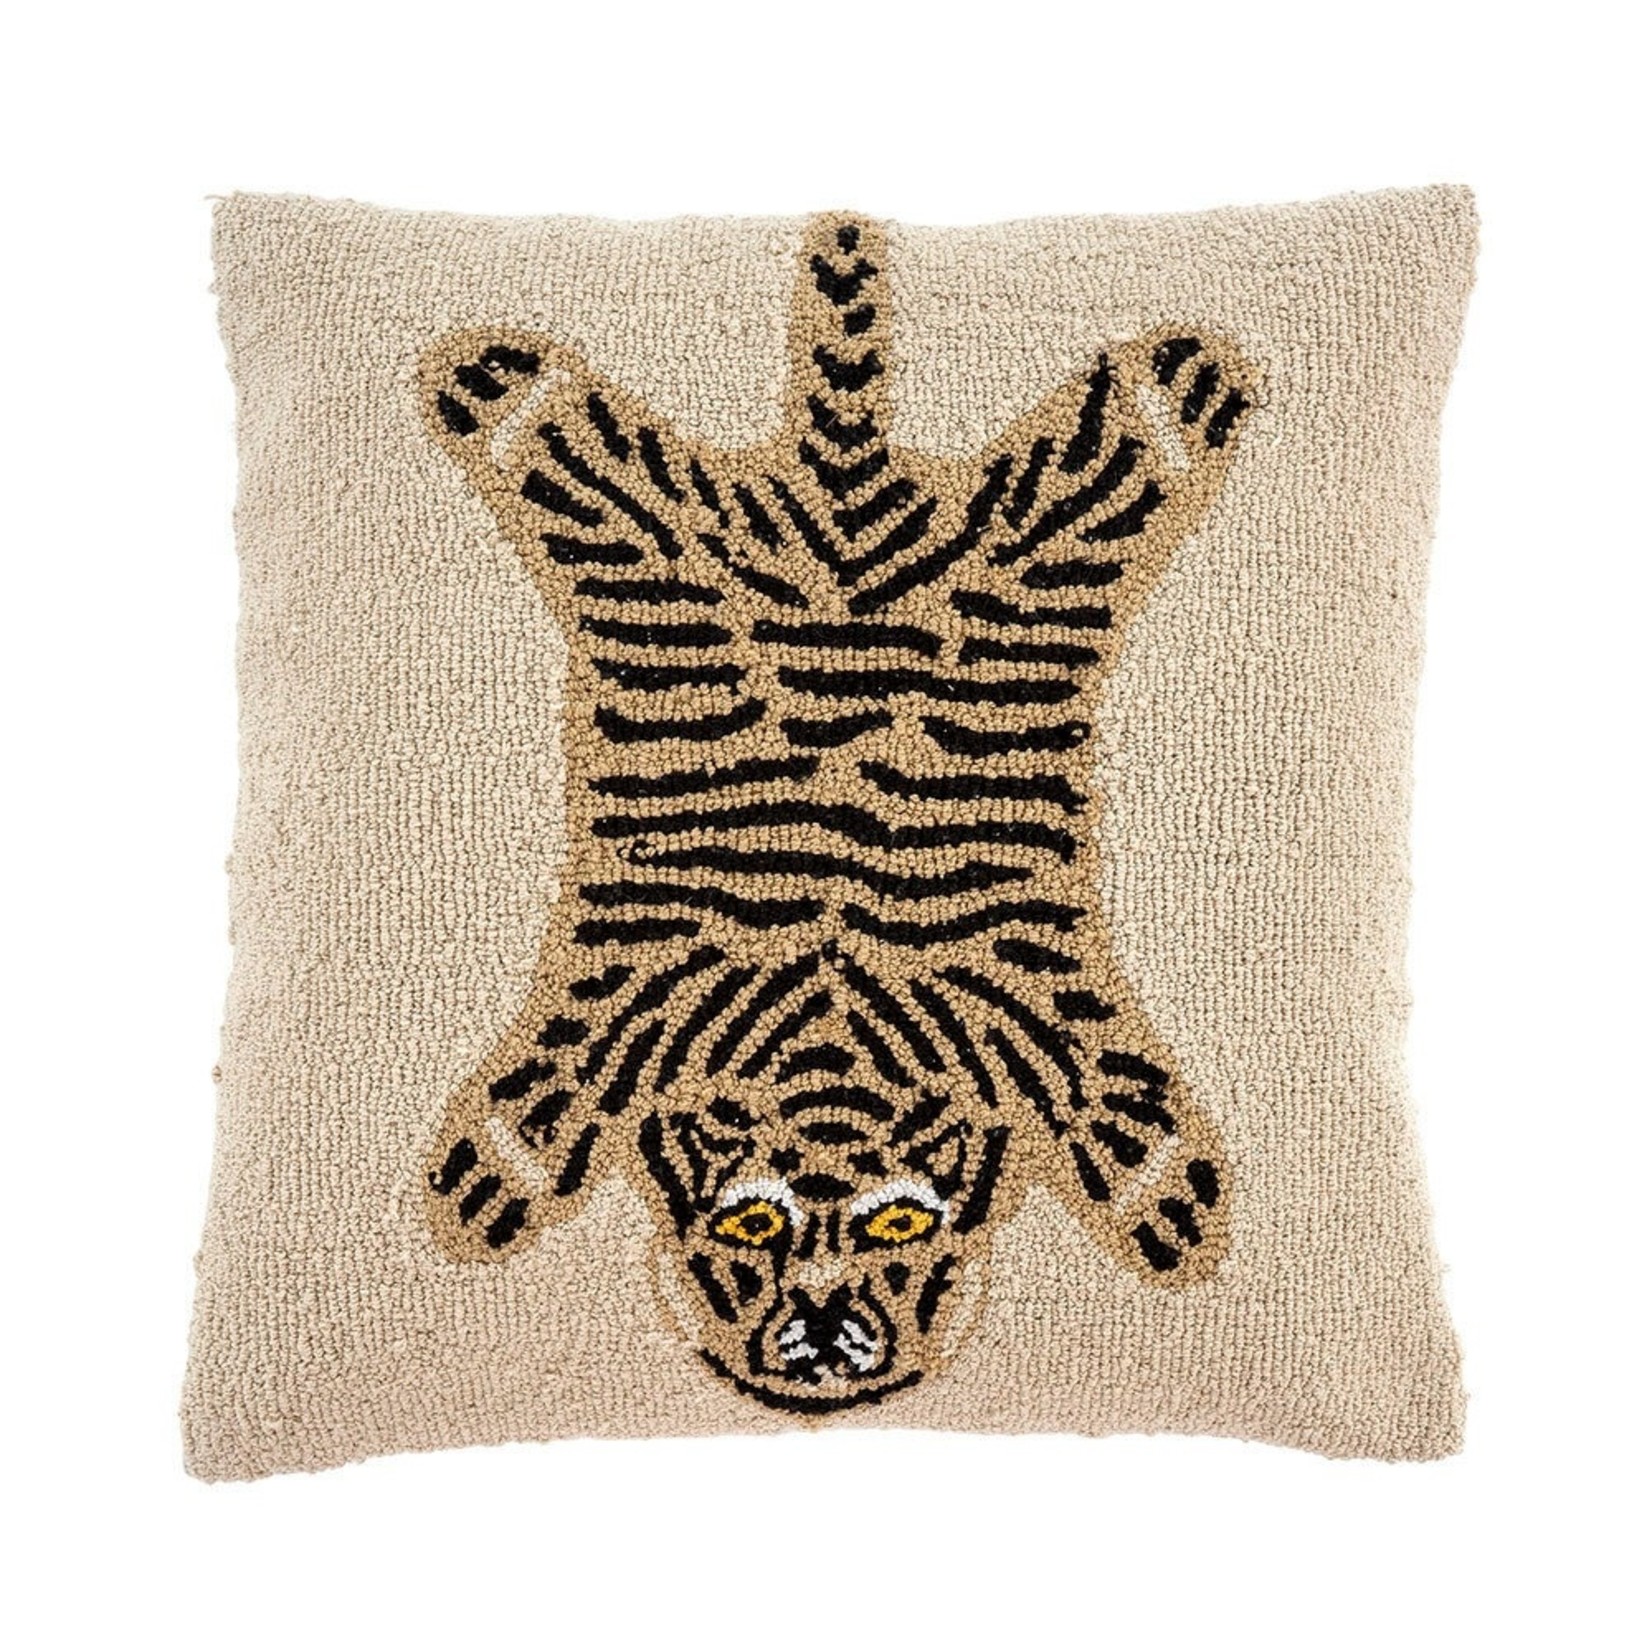 Indaba Tiger Tufted Pillow, Ecru